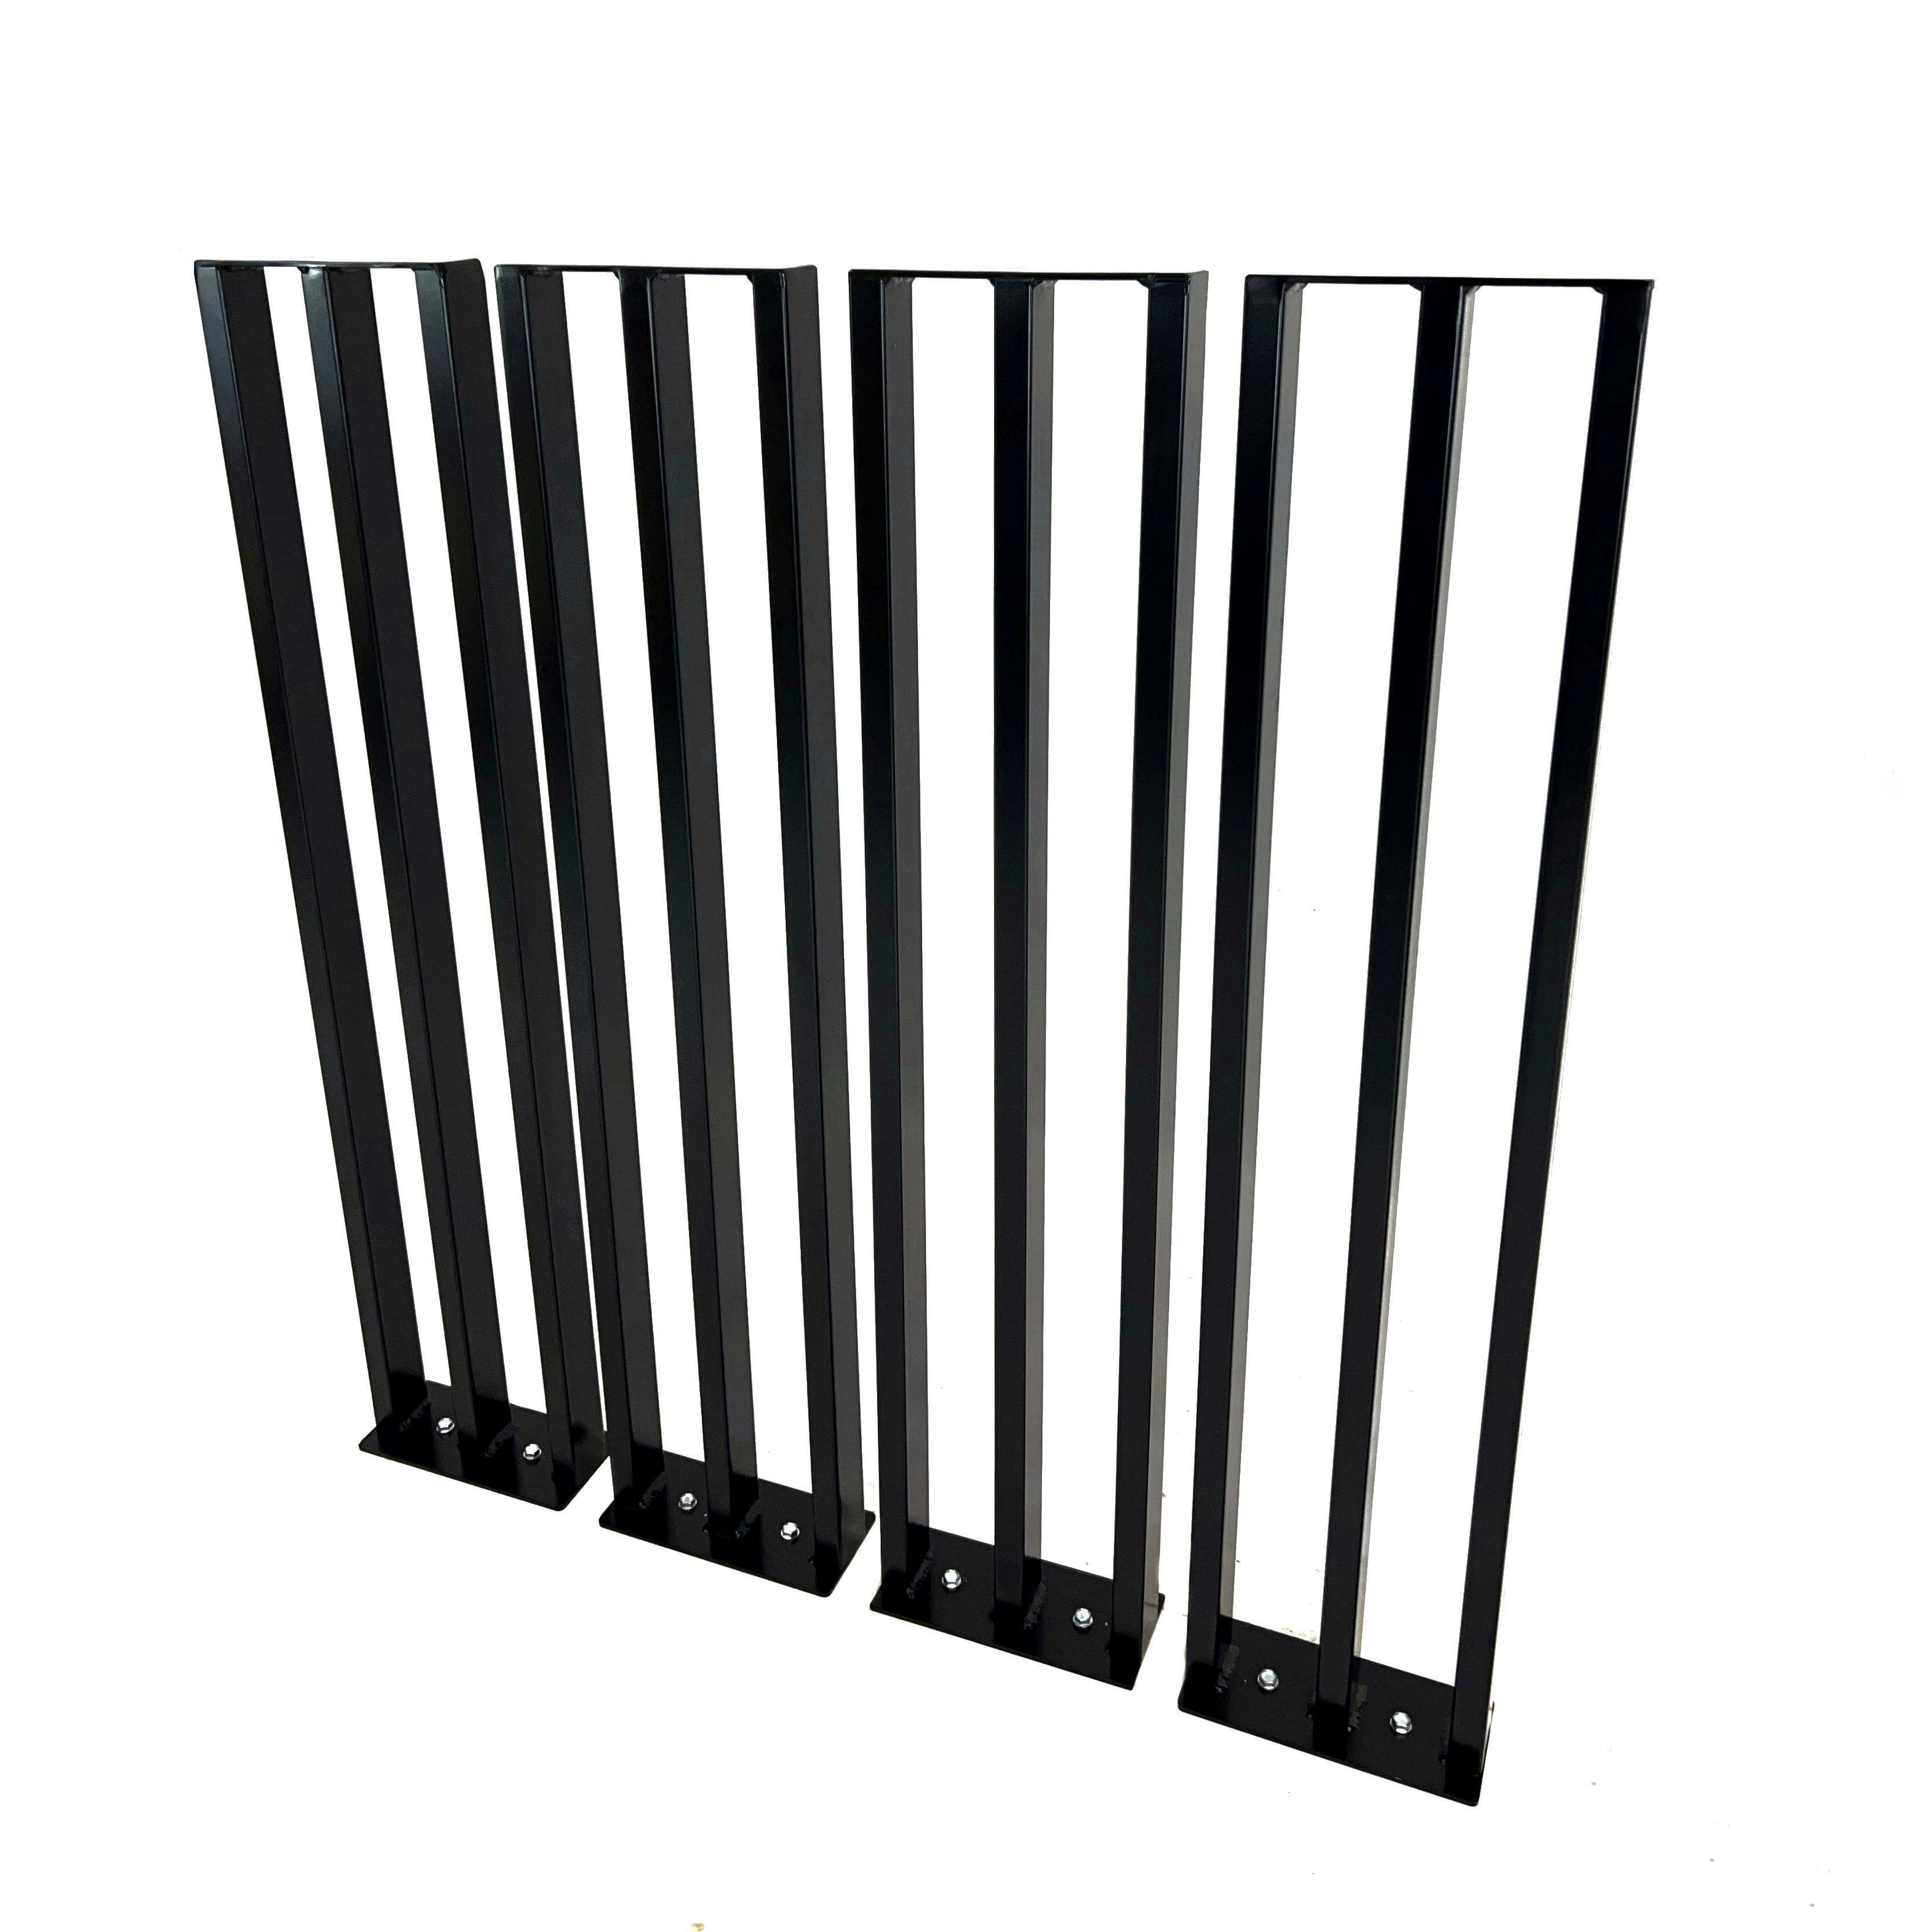 Modern Steel Stair Banister Railing, Black Powder Coat, Stainless Steel Hardware